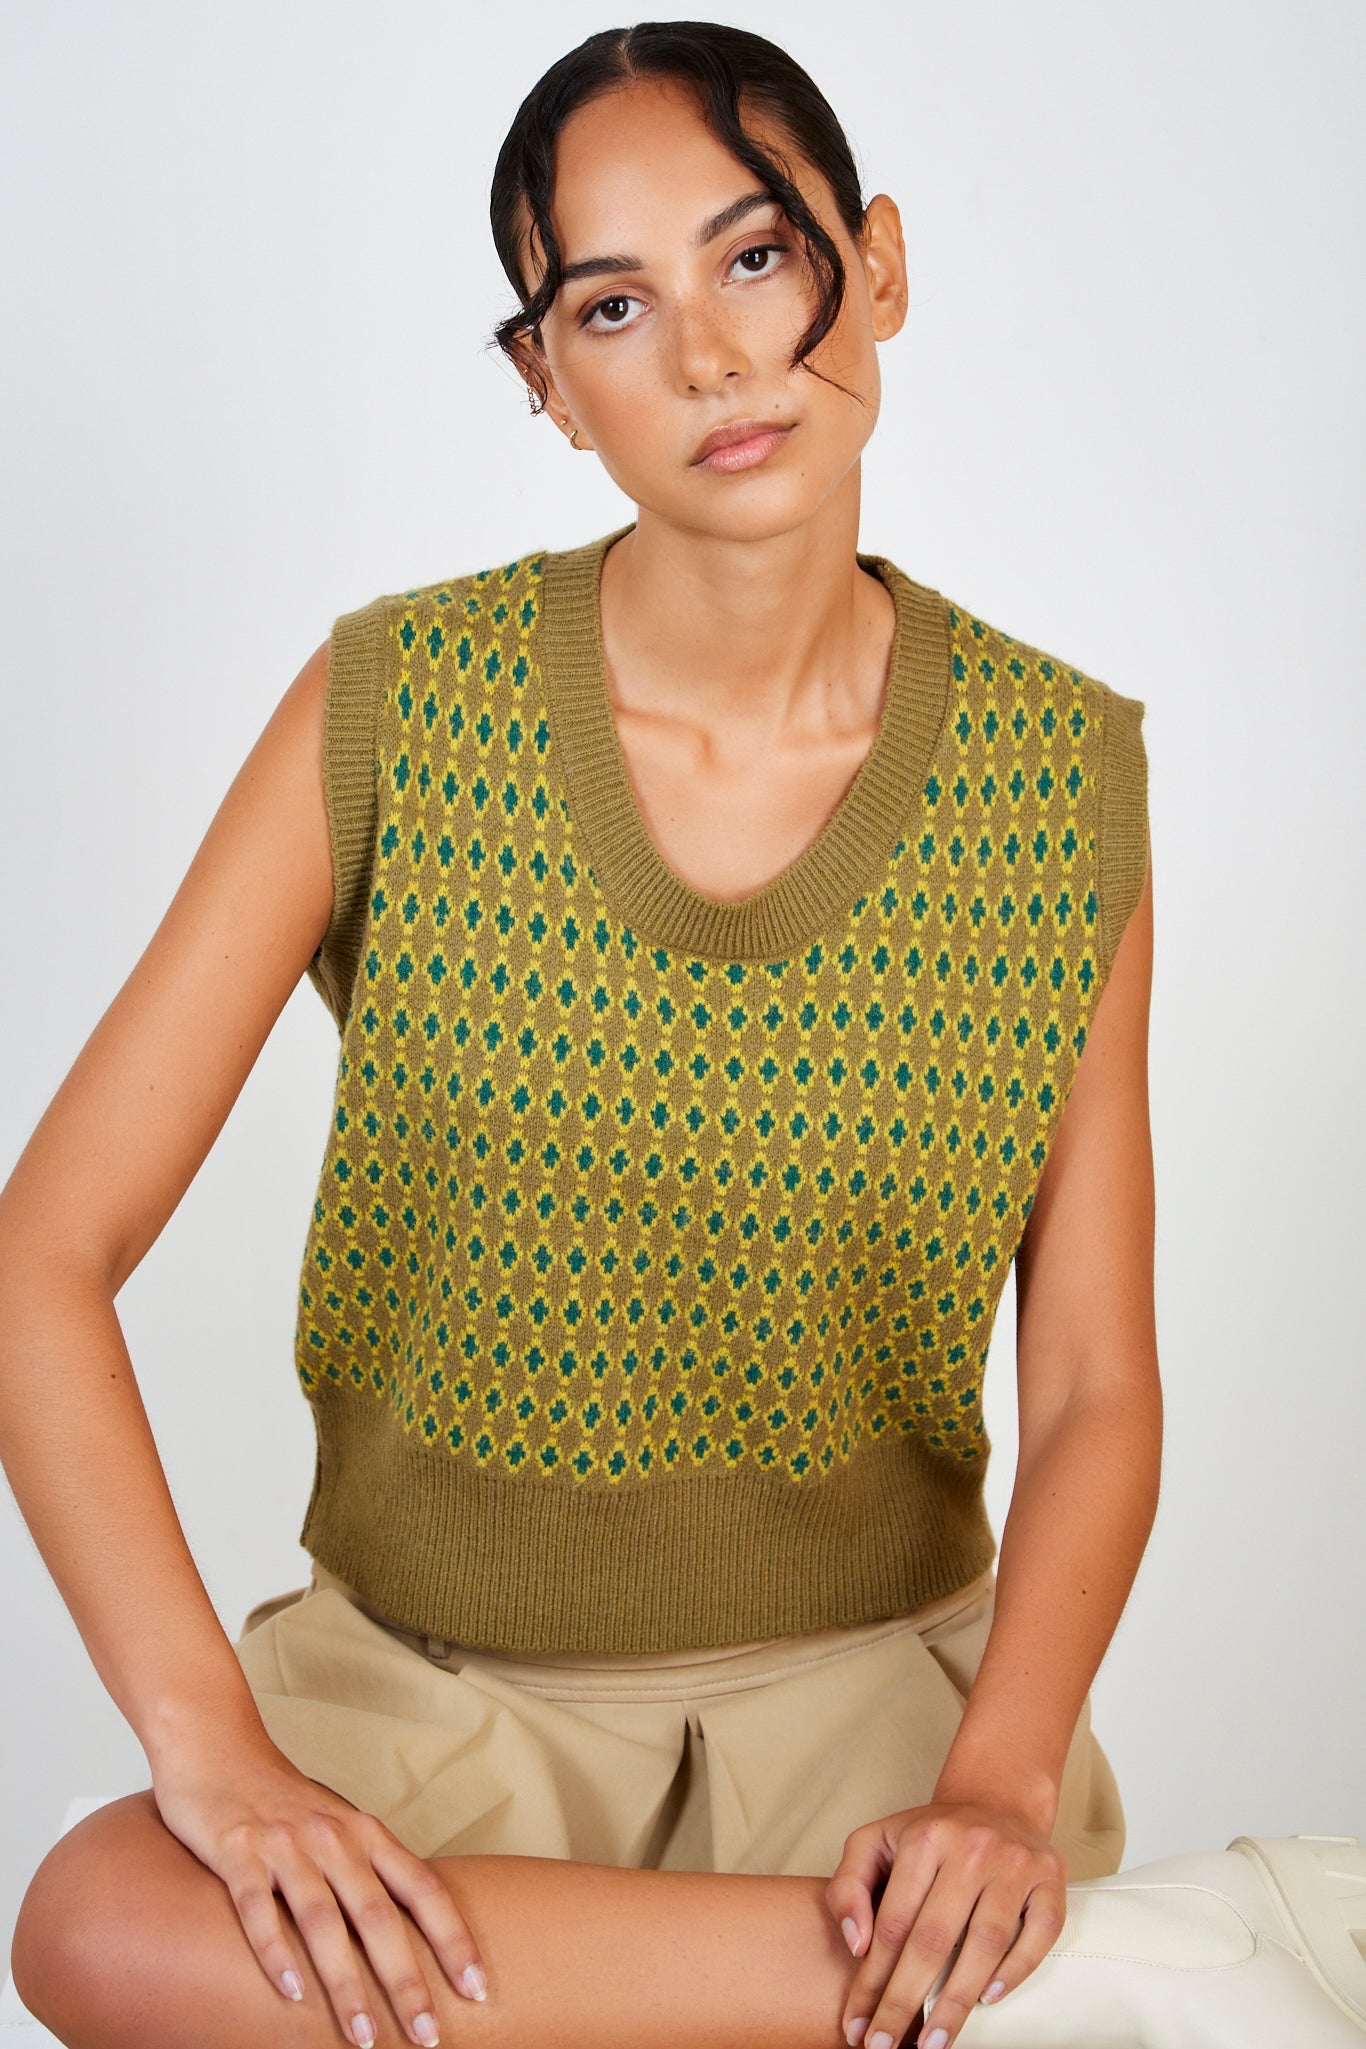 Khaki and green diamond print sweater vest